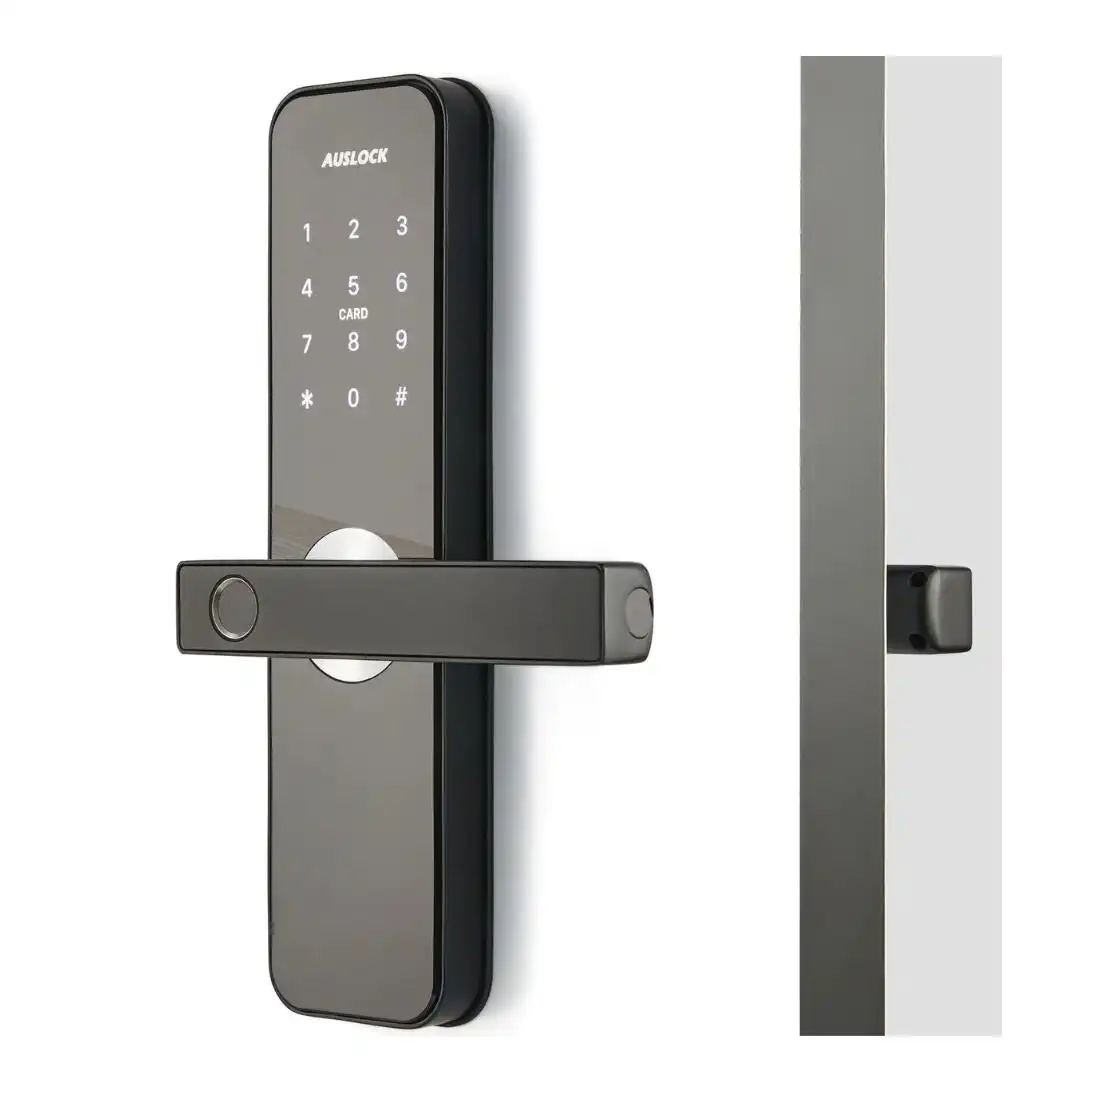 Auslock Handy Series H31B Keyless Entry Smart Door Lock (Modern & Smart) - Black